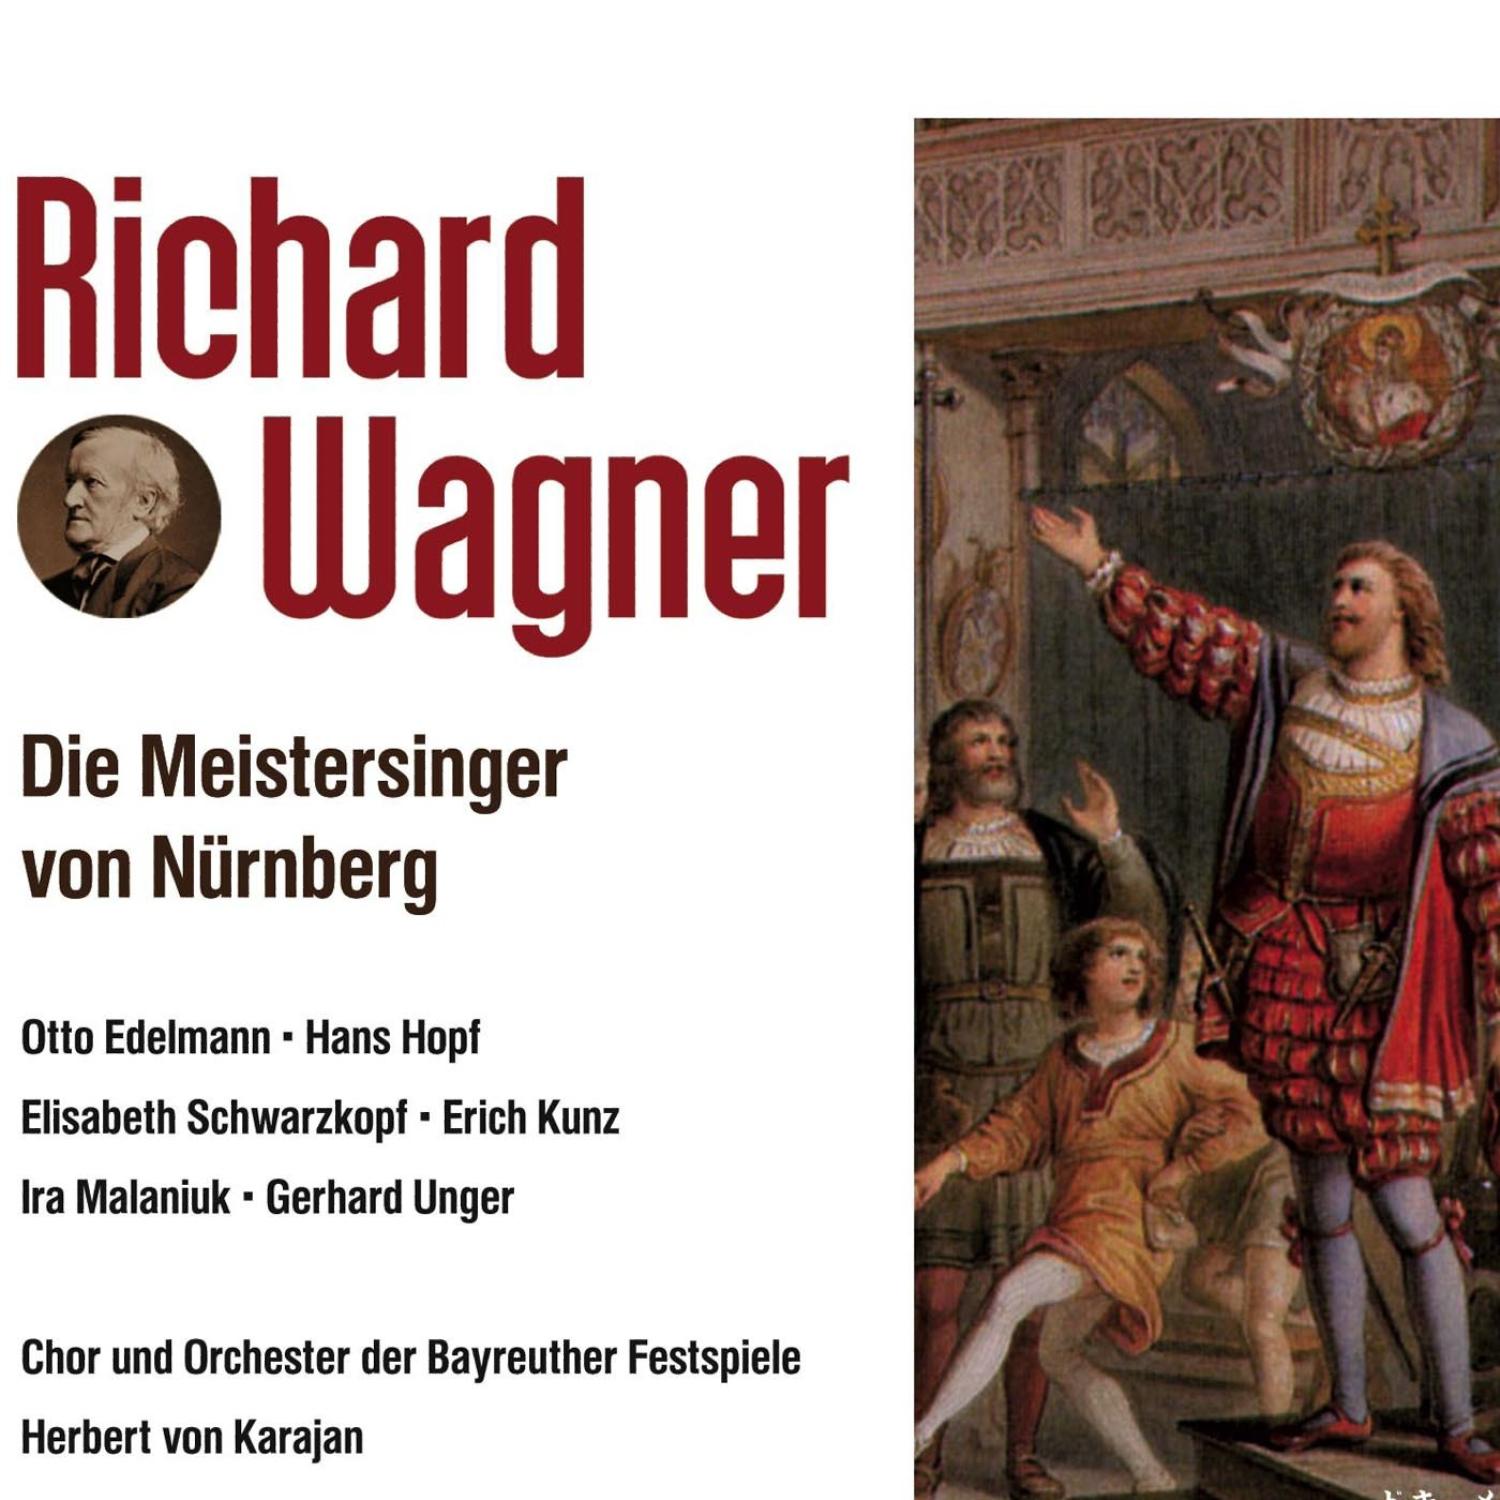 Die Meistersinger von Nü rnberg1 Aufzug Szene 3: Halt Meister! Nicht so geeilt!